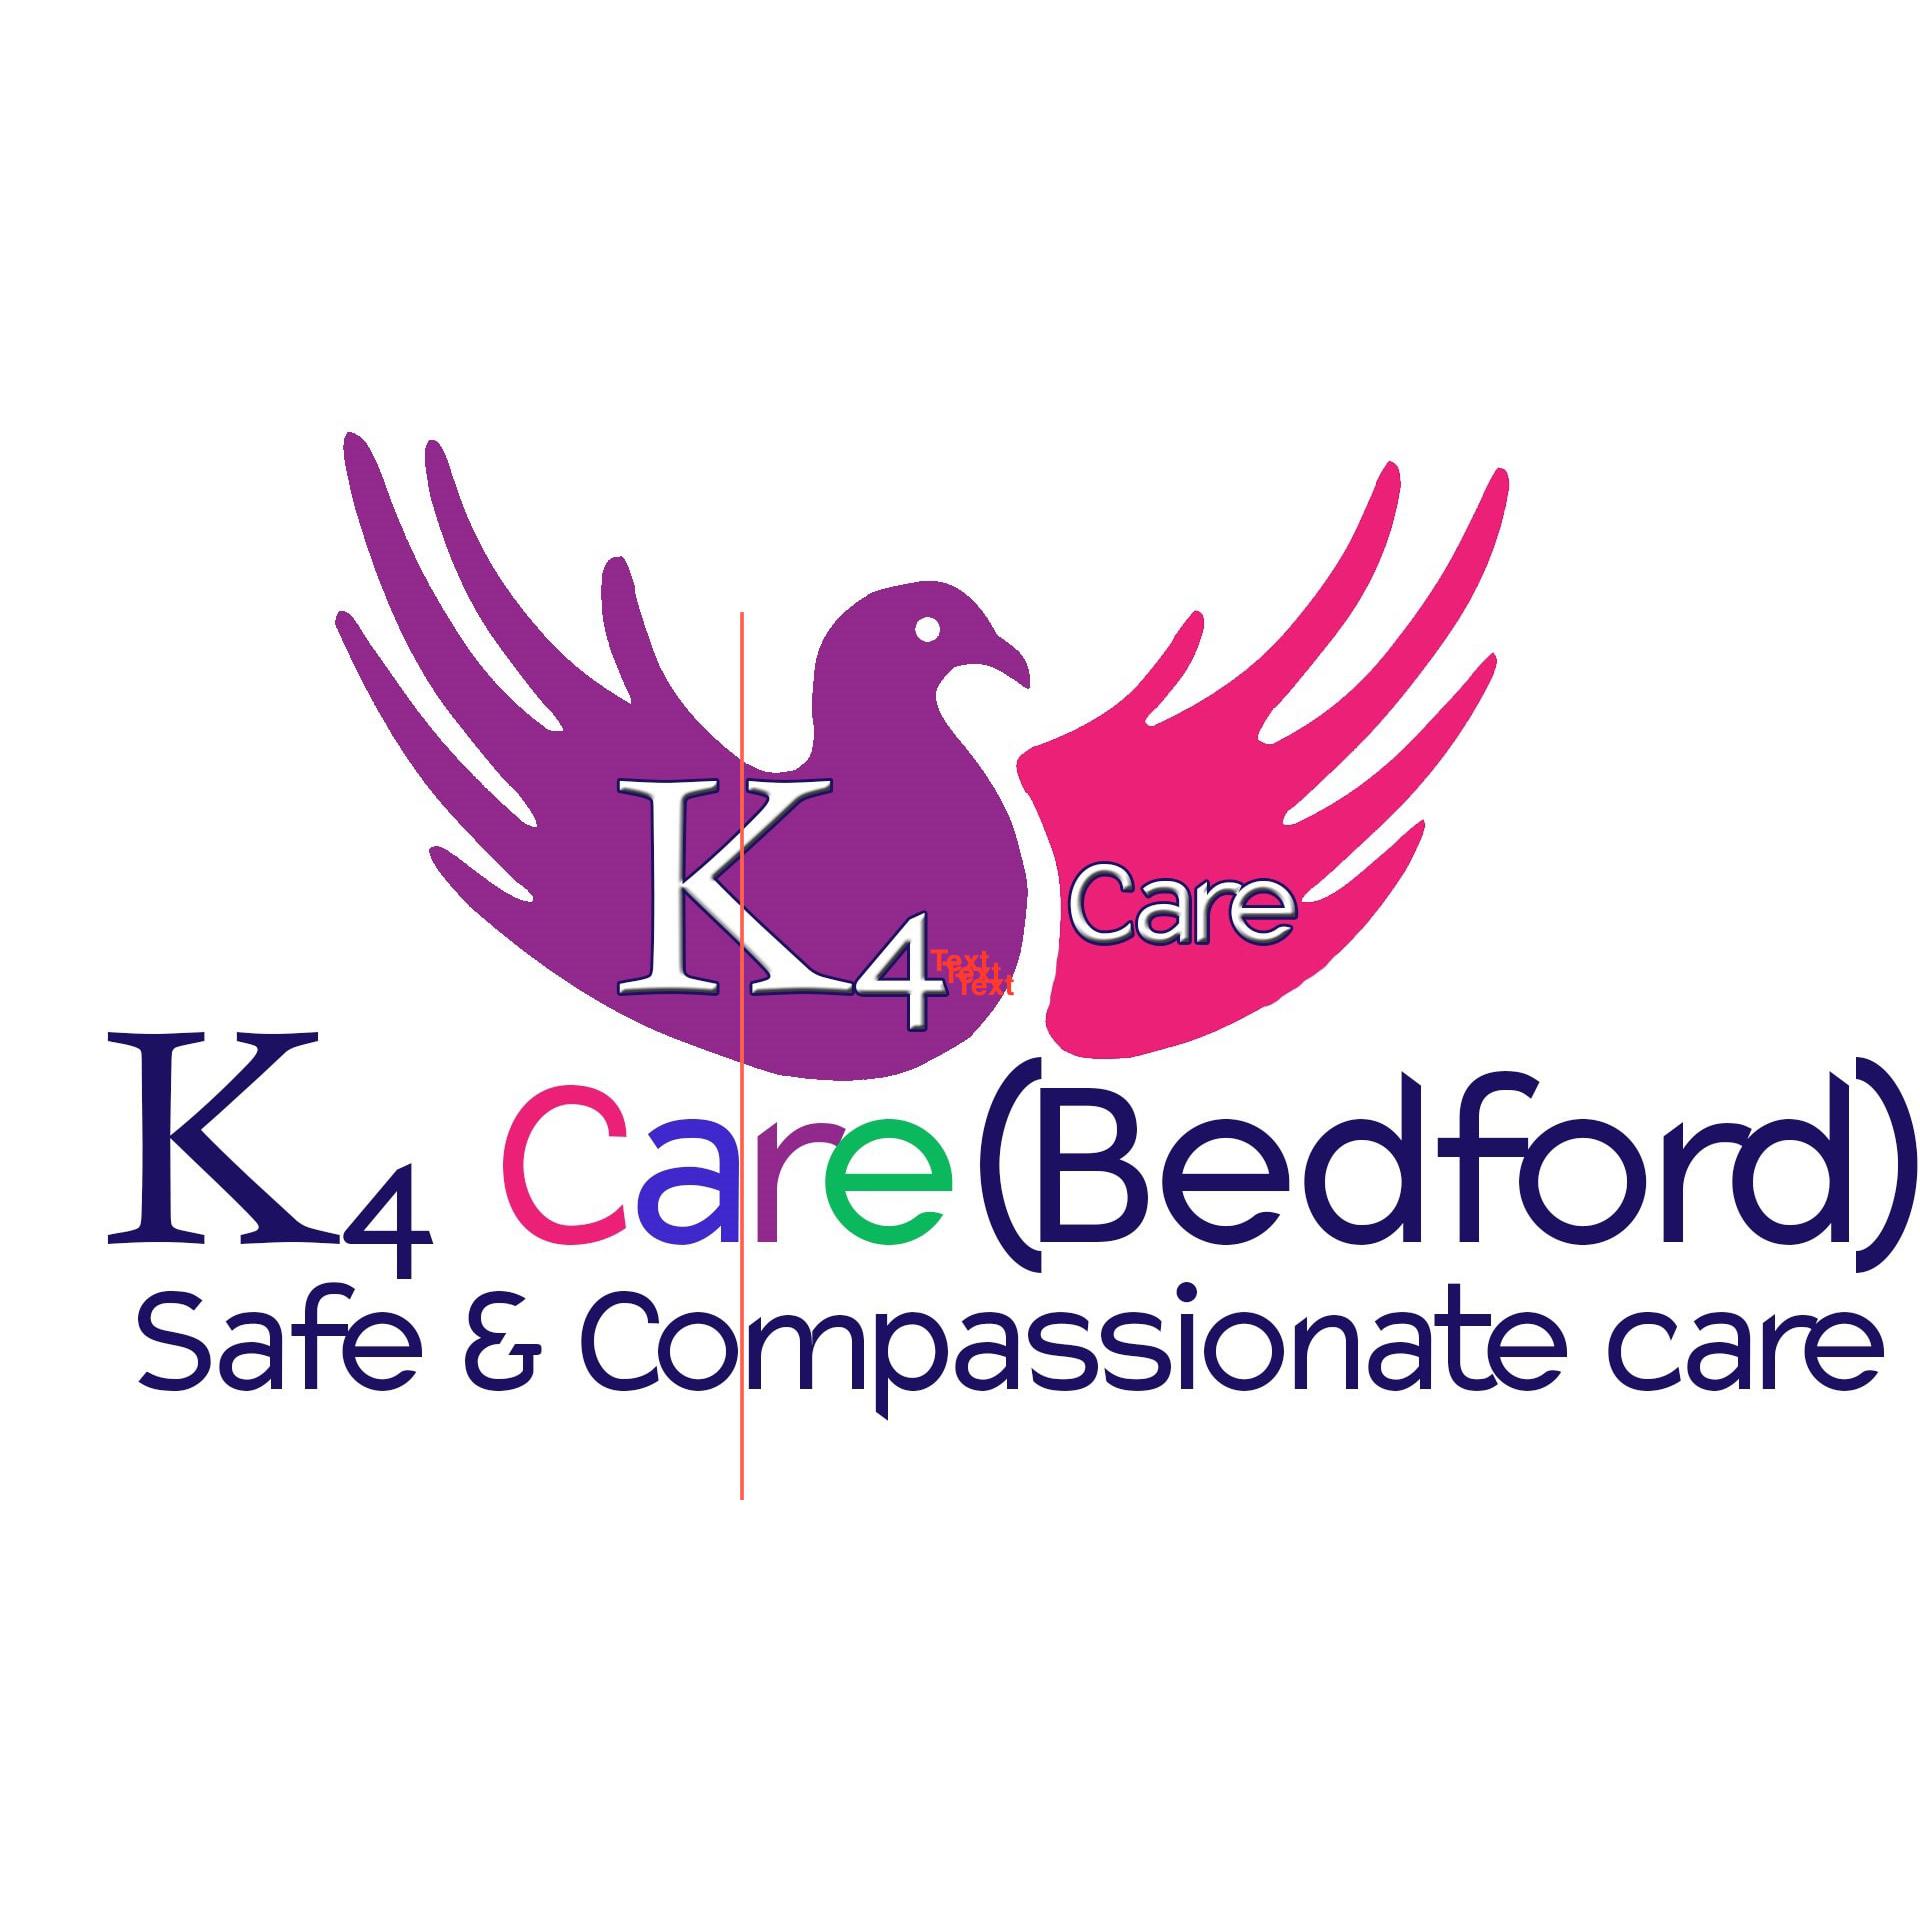 K4 Care Bedford Ltd Logo